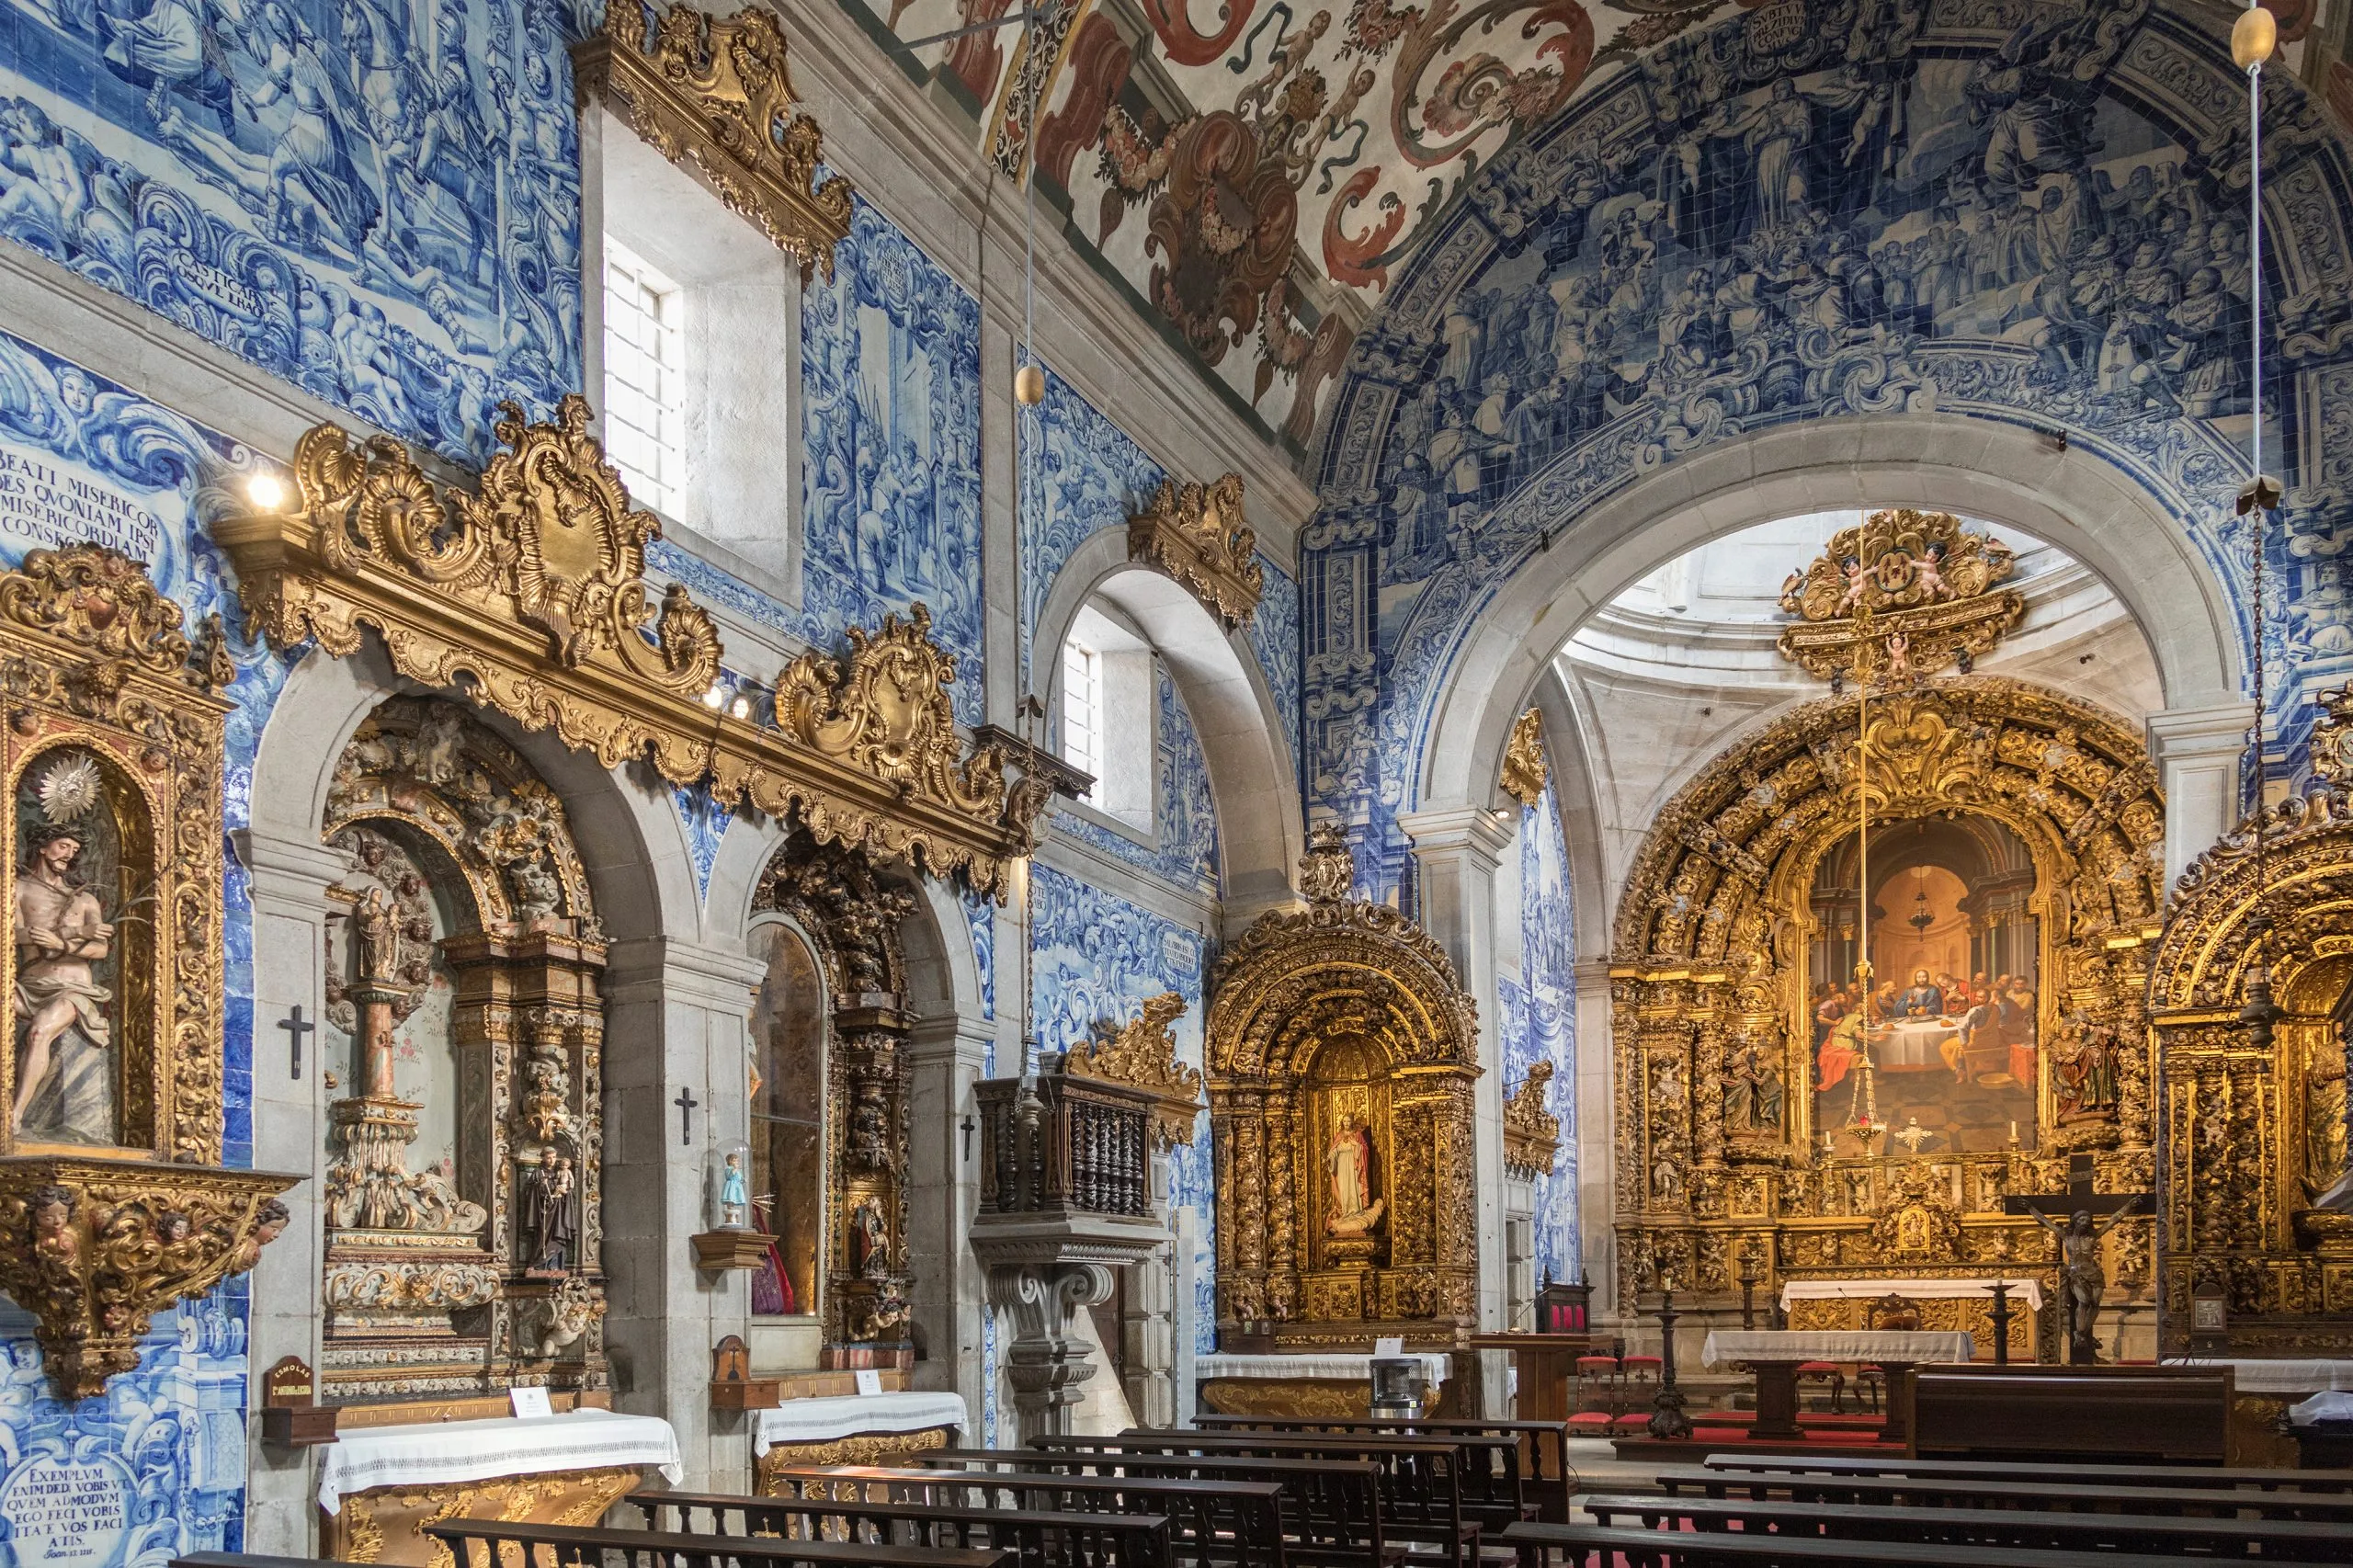 Se Cathedral of Viana do Castelo - Portugal